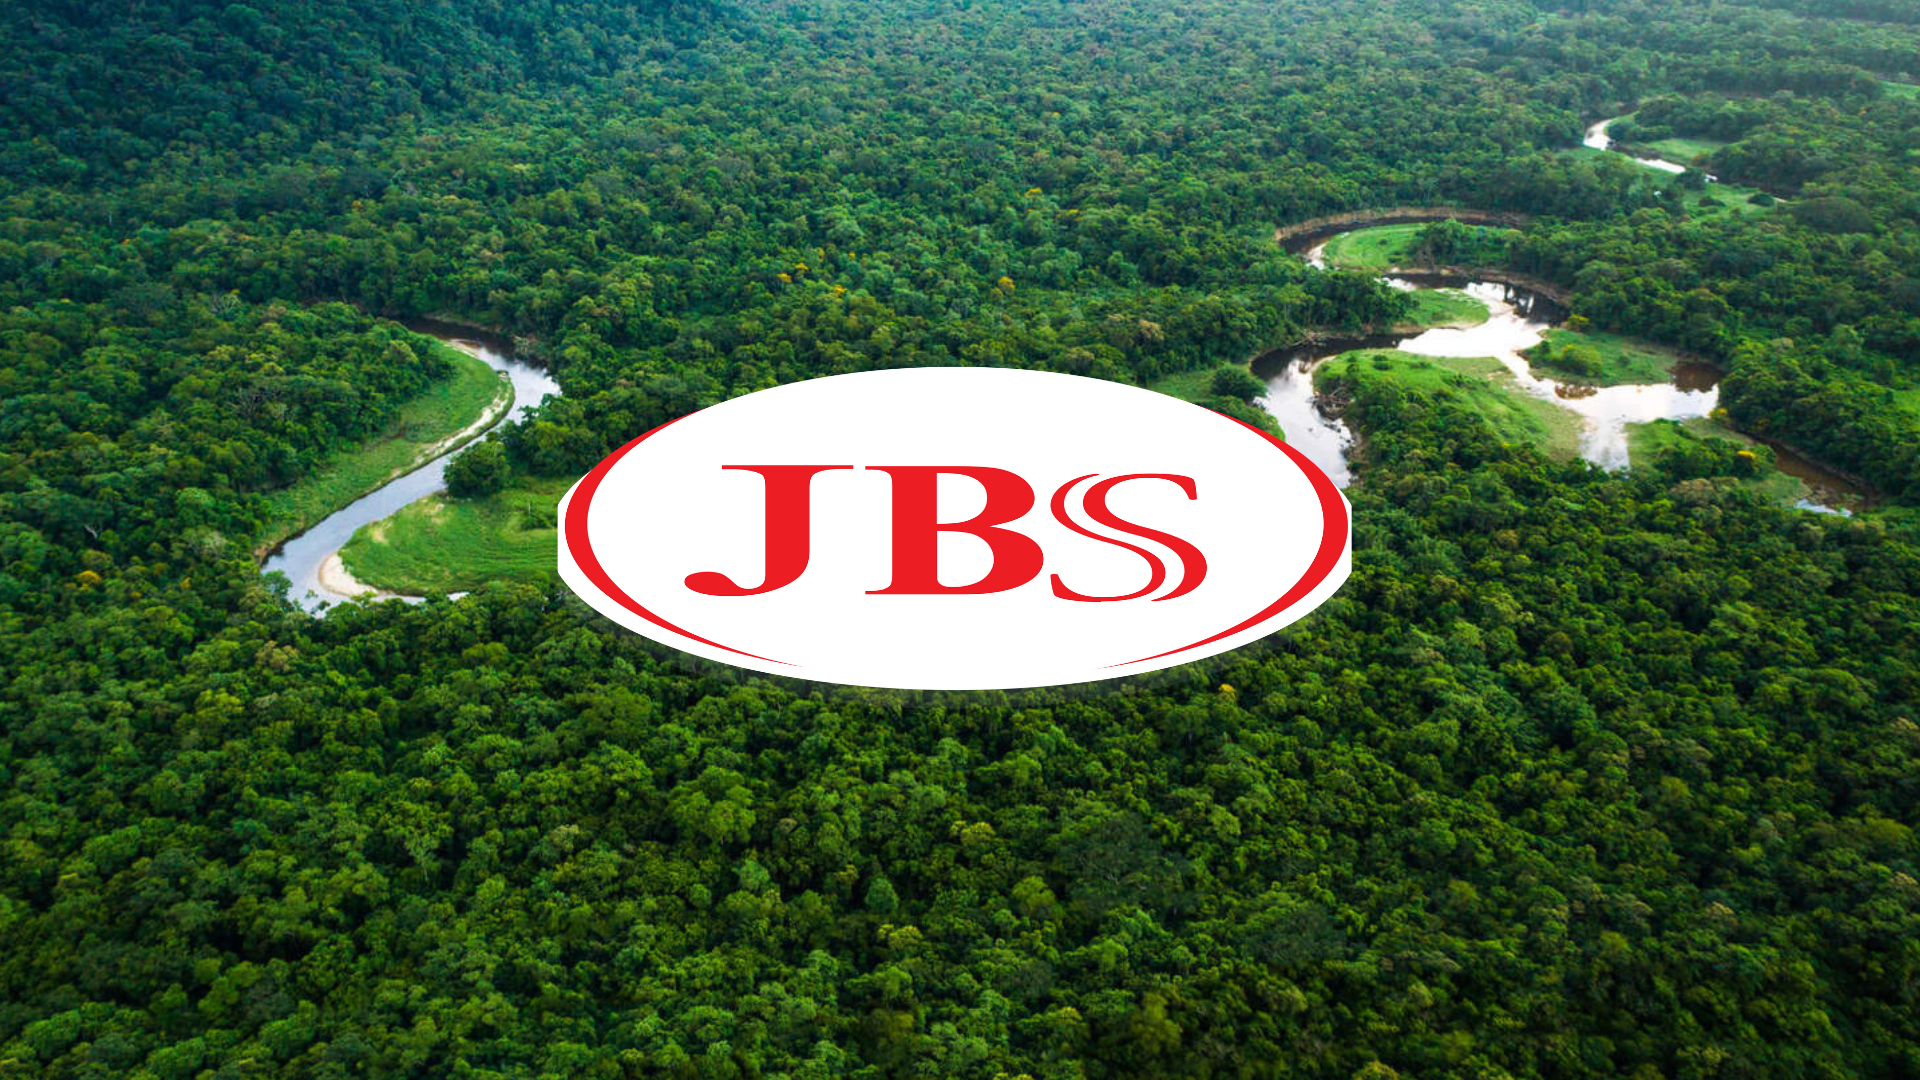 JBS – Amazônia – projetos